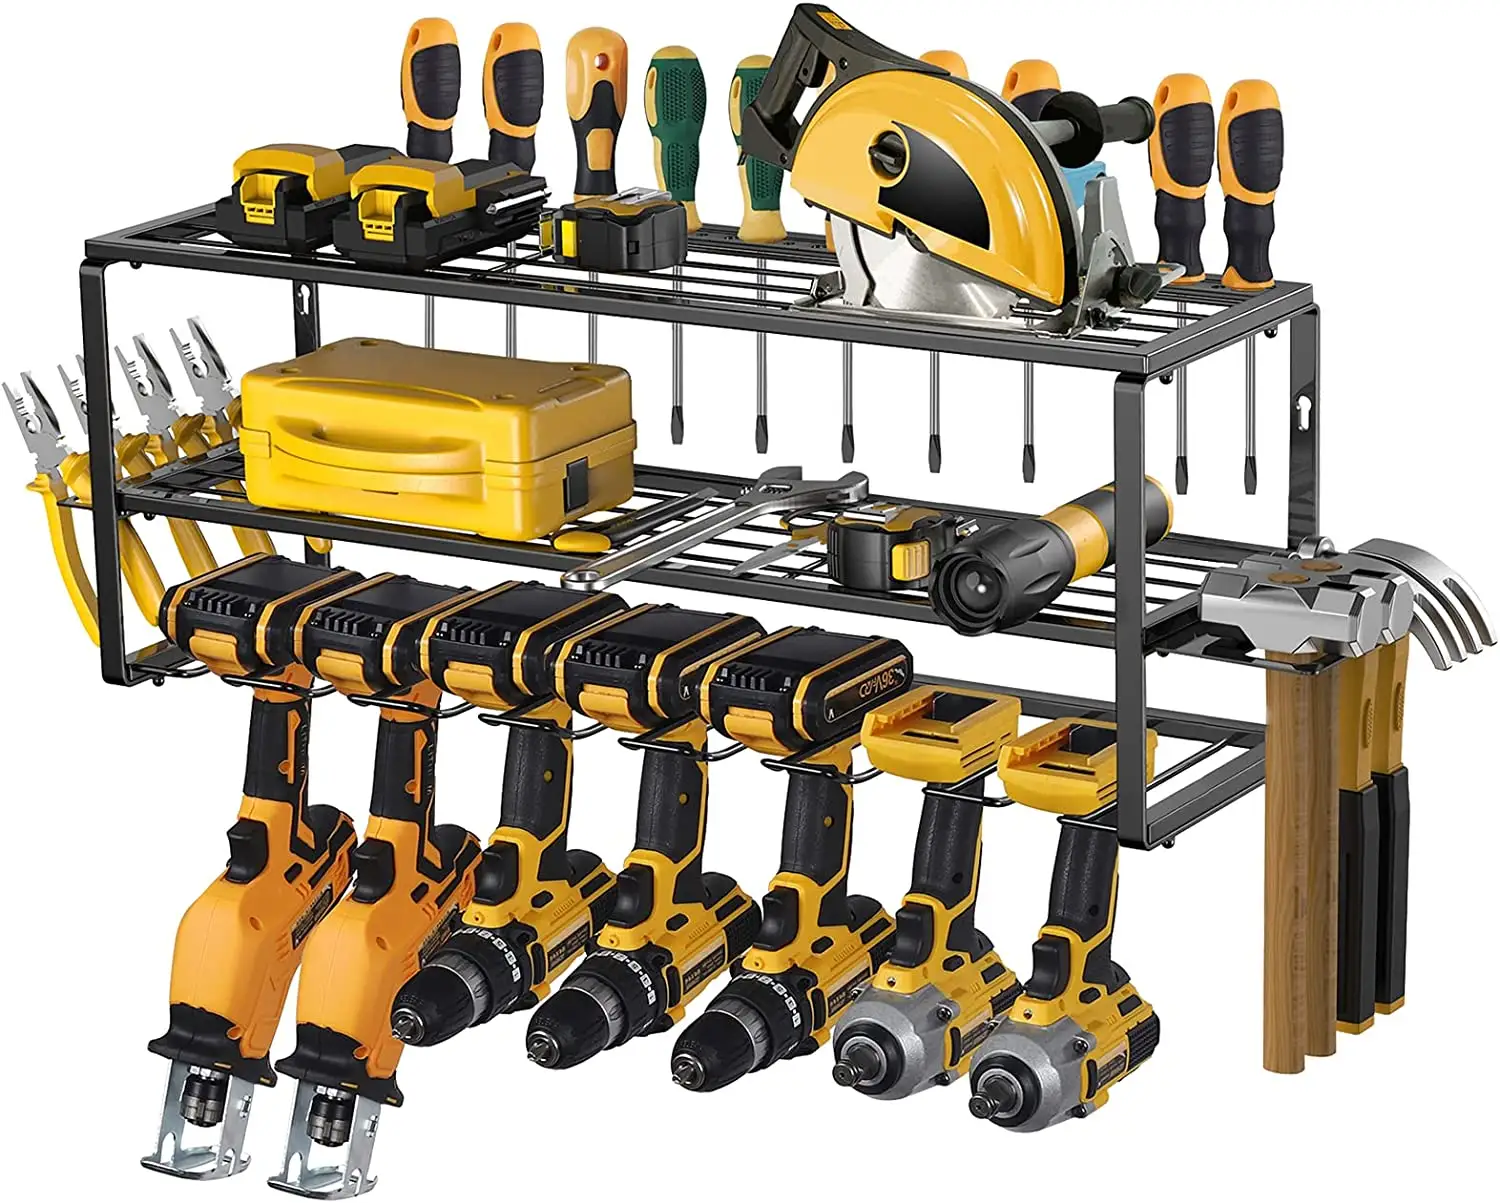 7 Drill Holders Storage Racks & Shelving Units Power Tools Drills Steel Rack Stand Wall Mounted Garage Metal Organizer Shelves